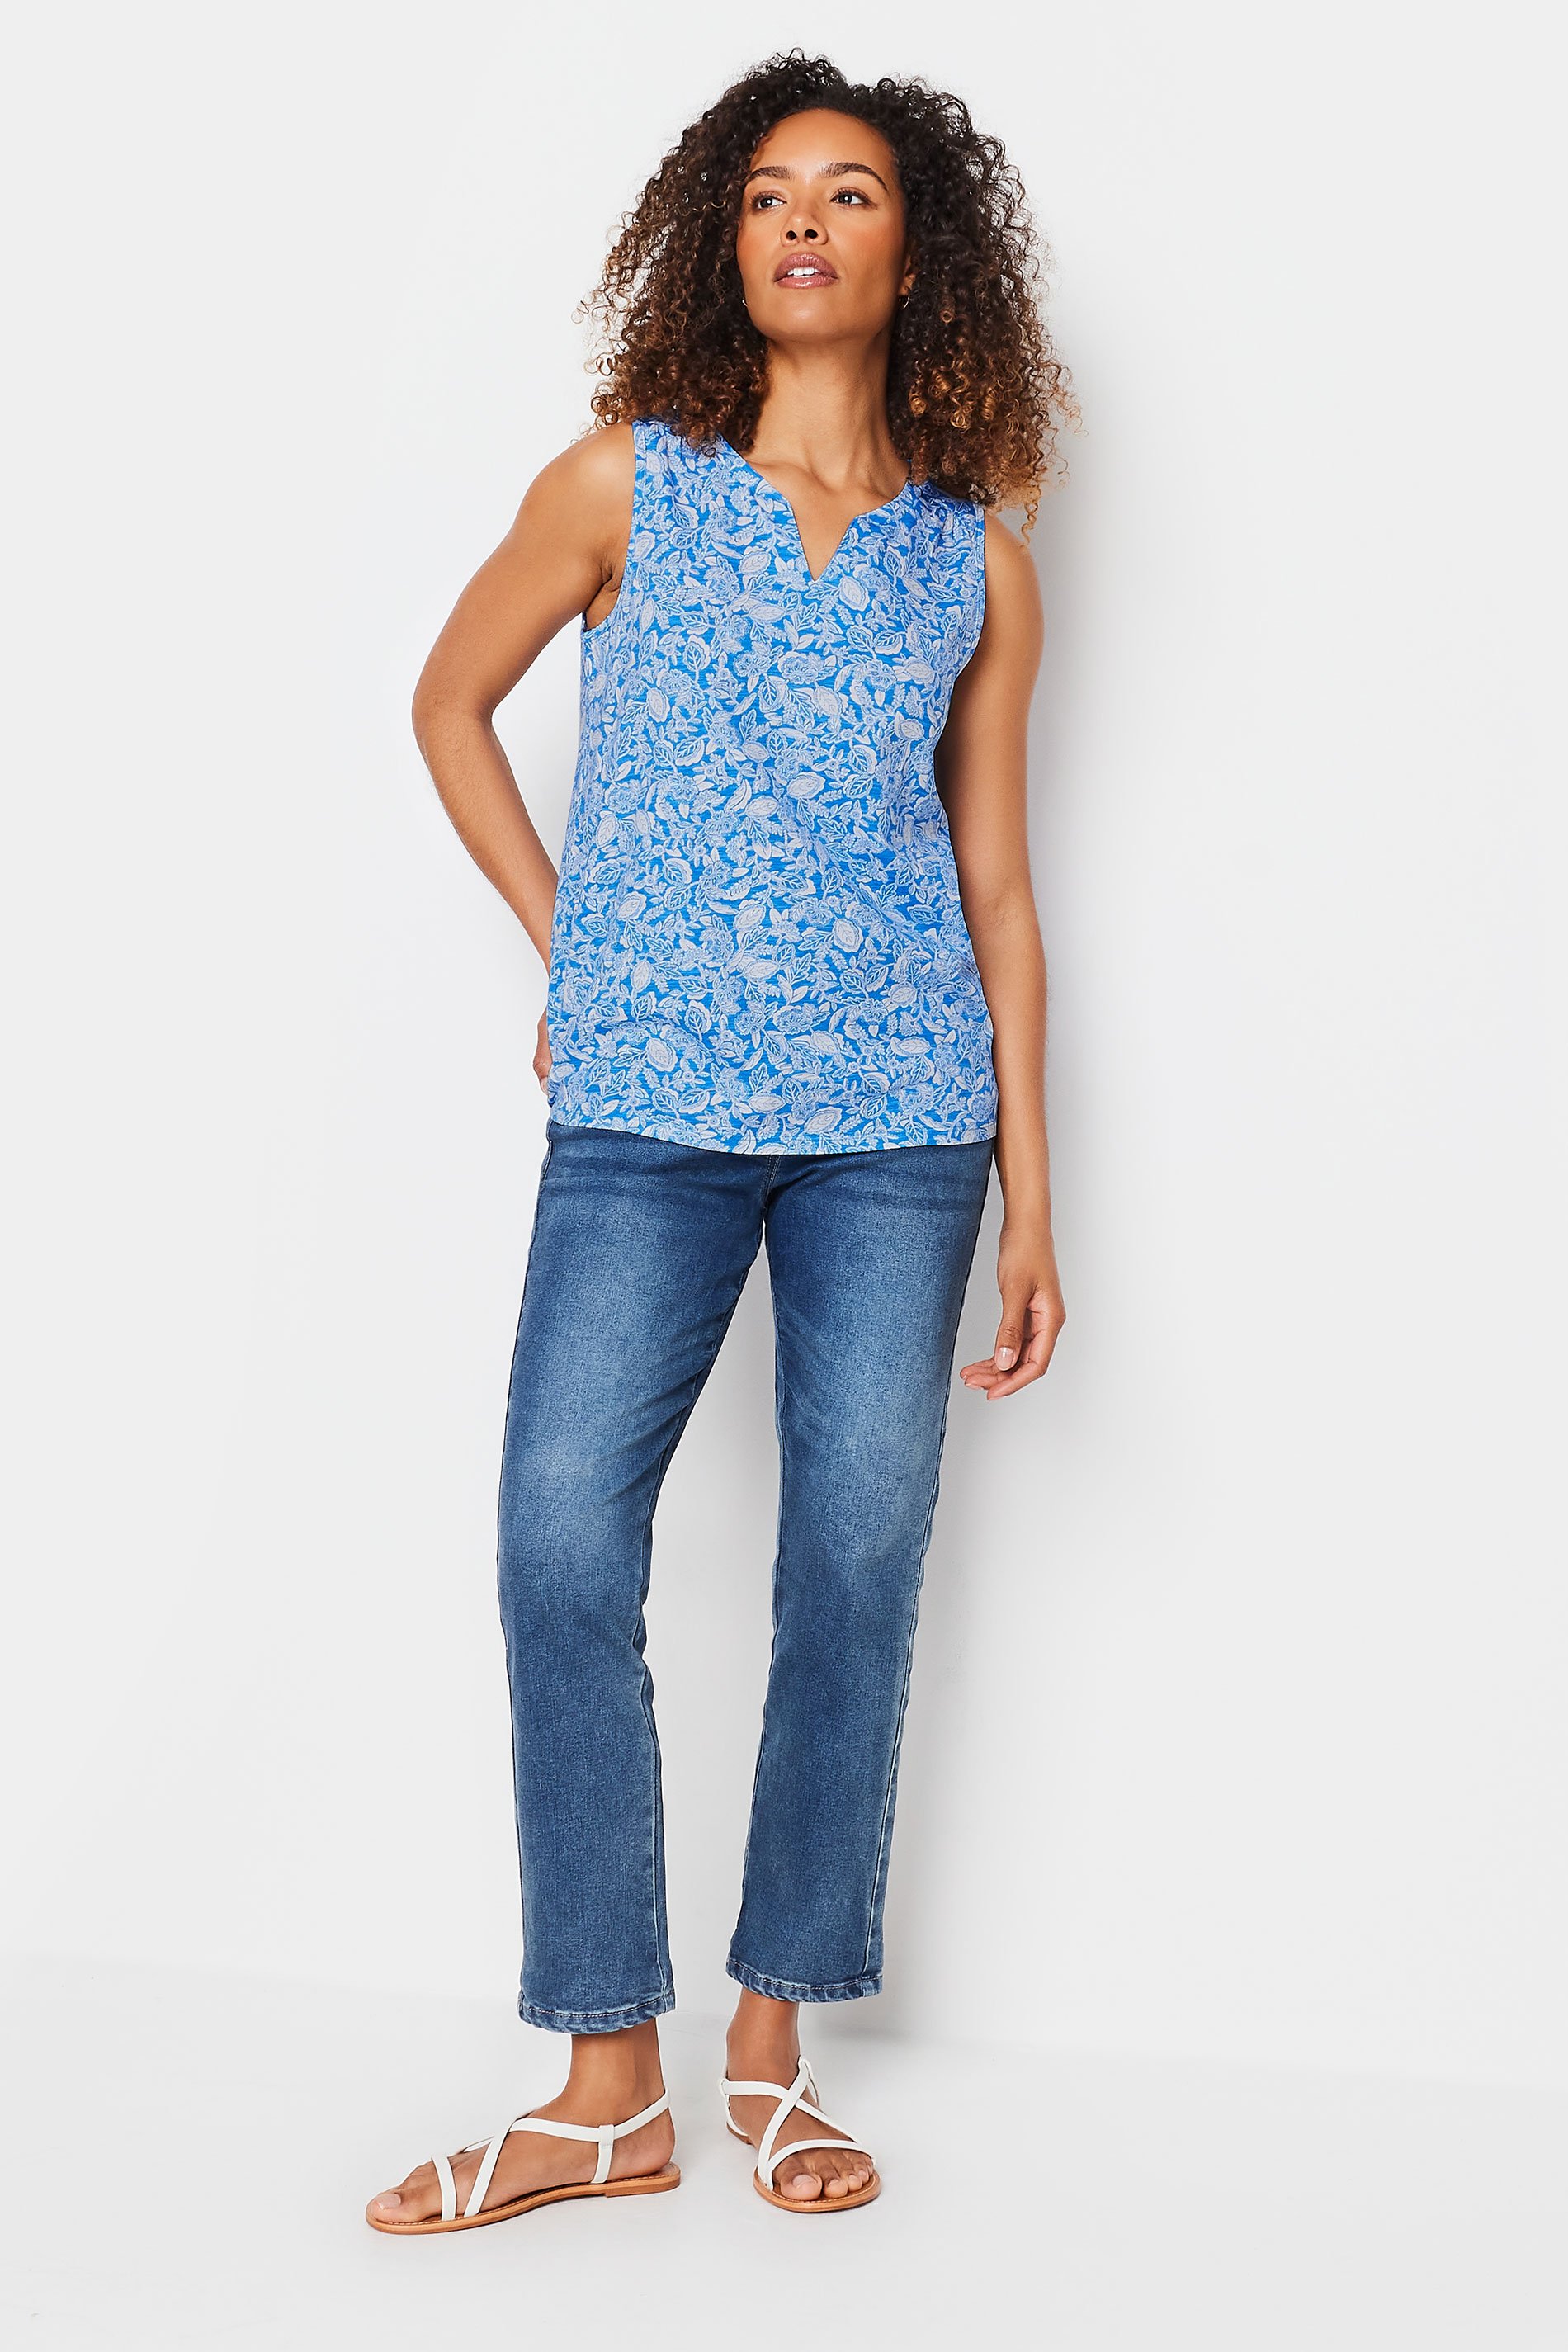 M&Co Blue Leaf Print Sleeveless Notch Neck Cotton Vest Top | M&Co 2